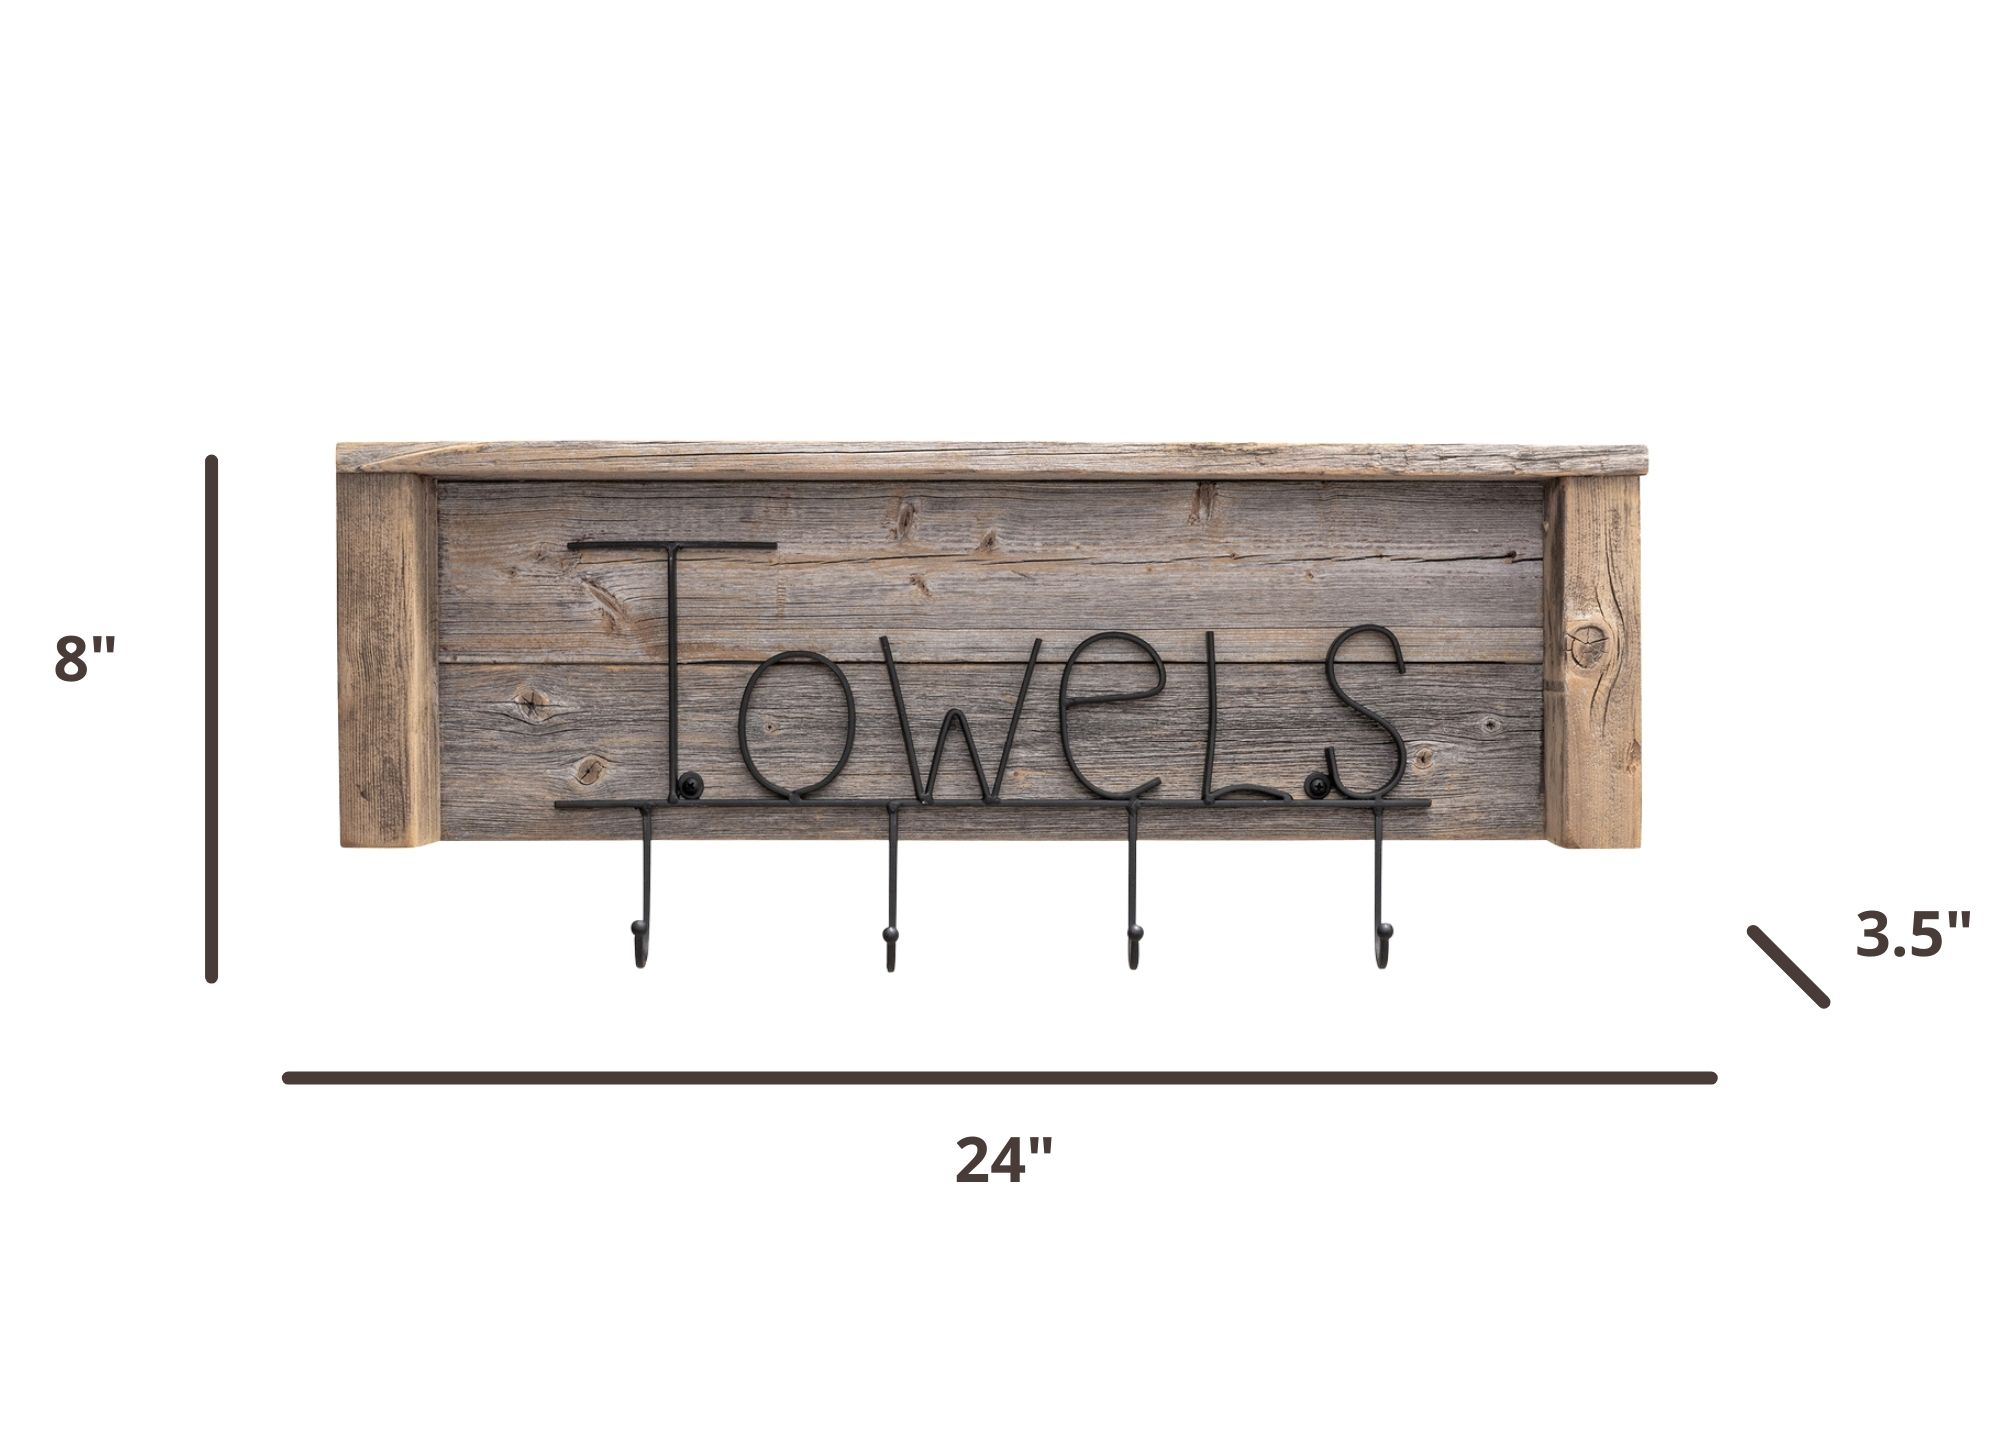 Towel wall rack dimensions